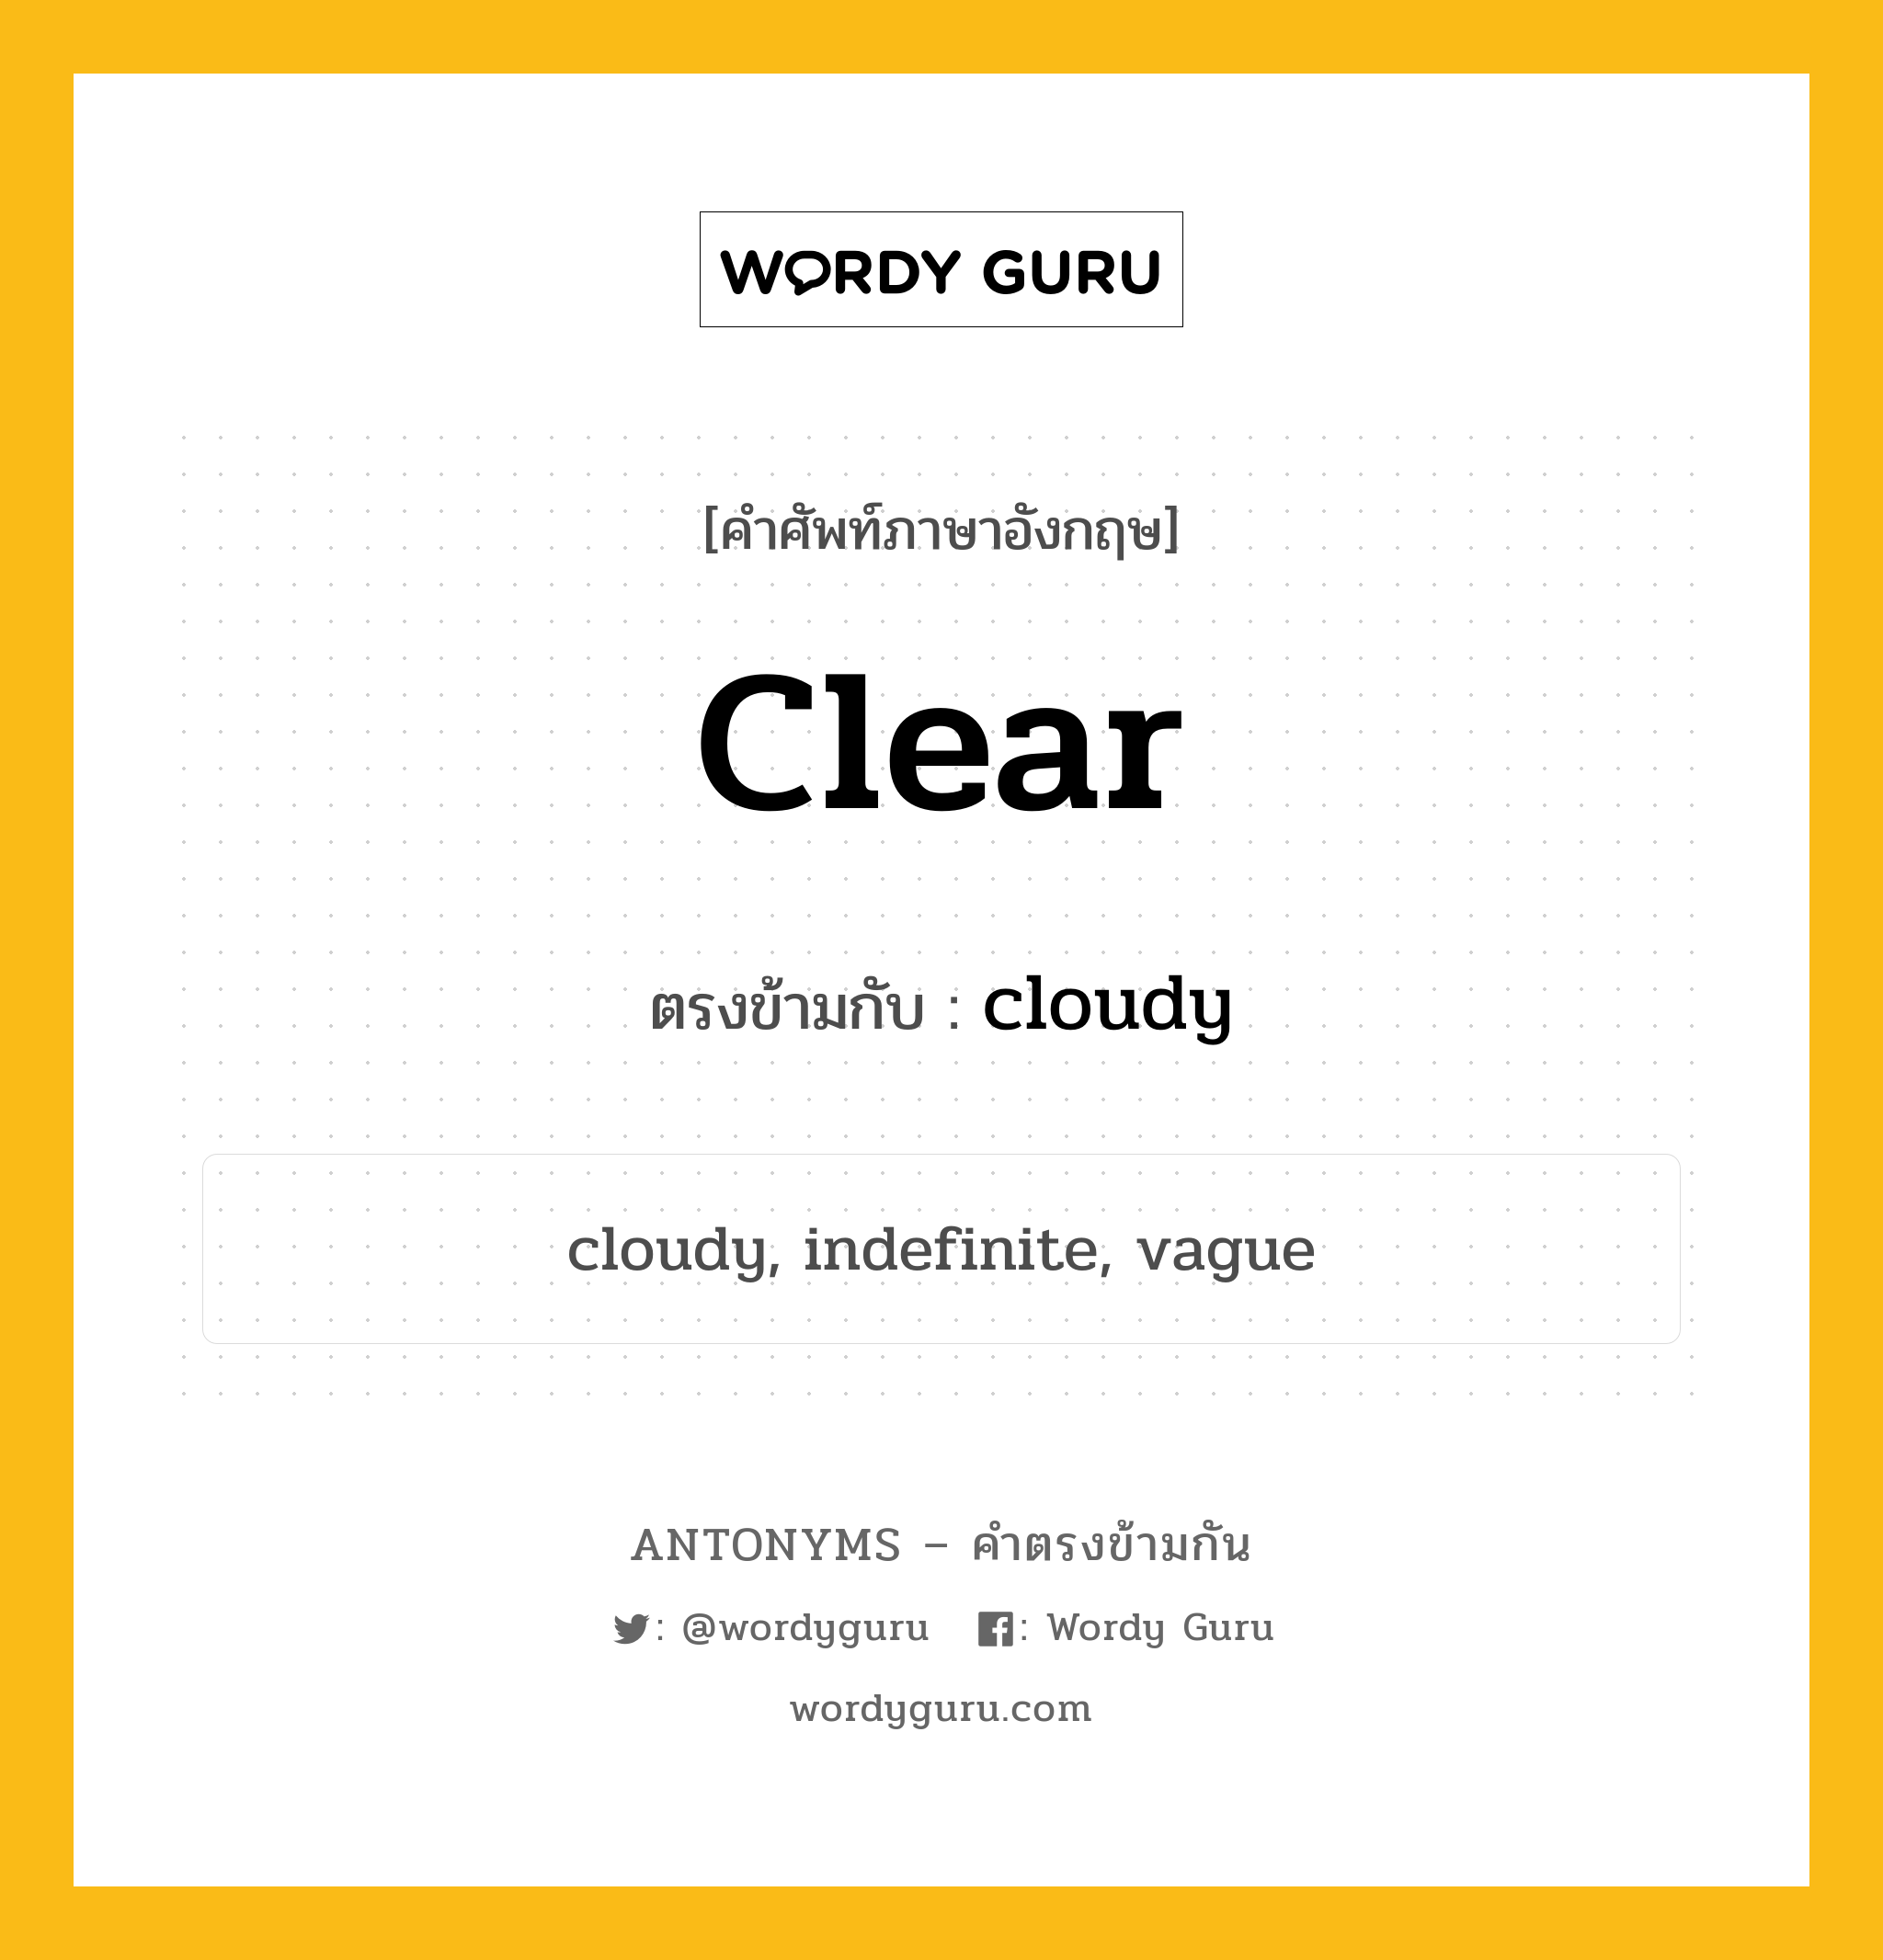 clear เป็นคำตรงข้ามกับคำไหนบ้าง?, คำศัพท์ภาษาอังกฤษ clear ตรงข้ามกับ cloudy หมวด cloudy